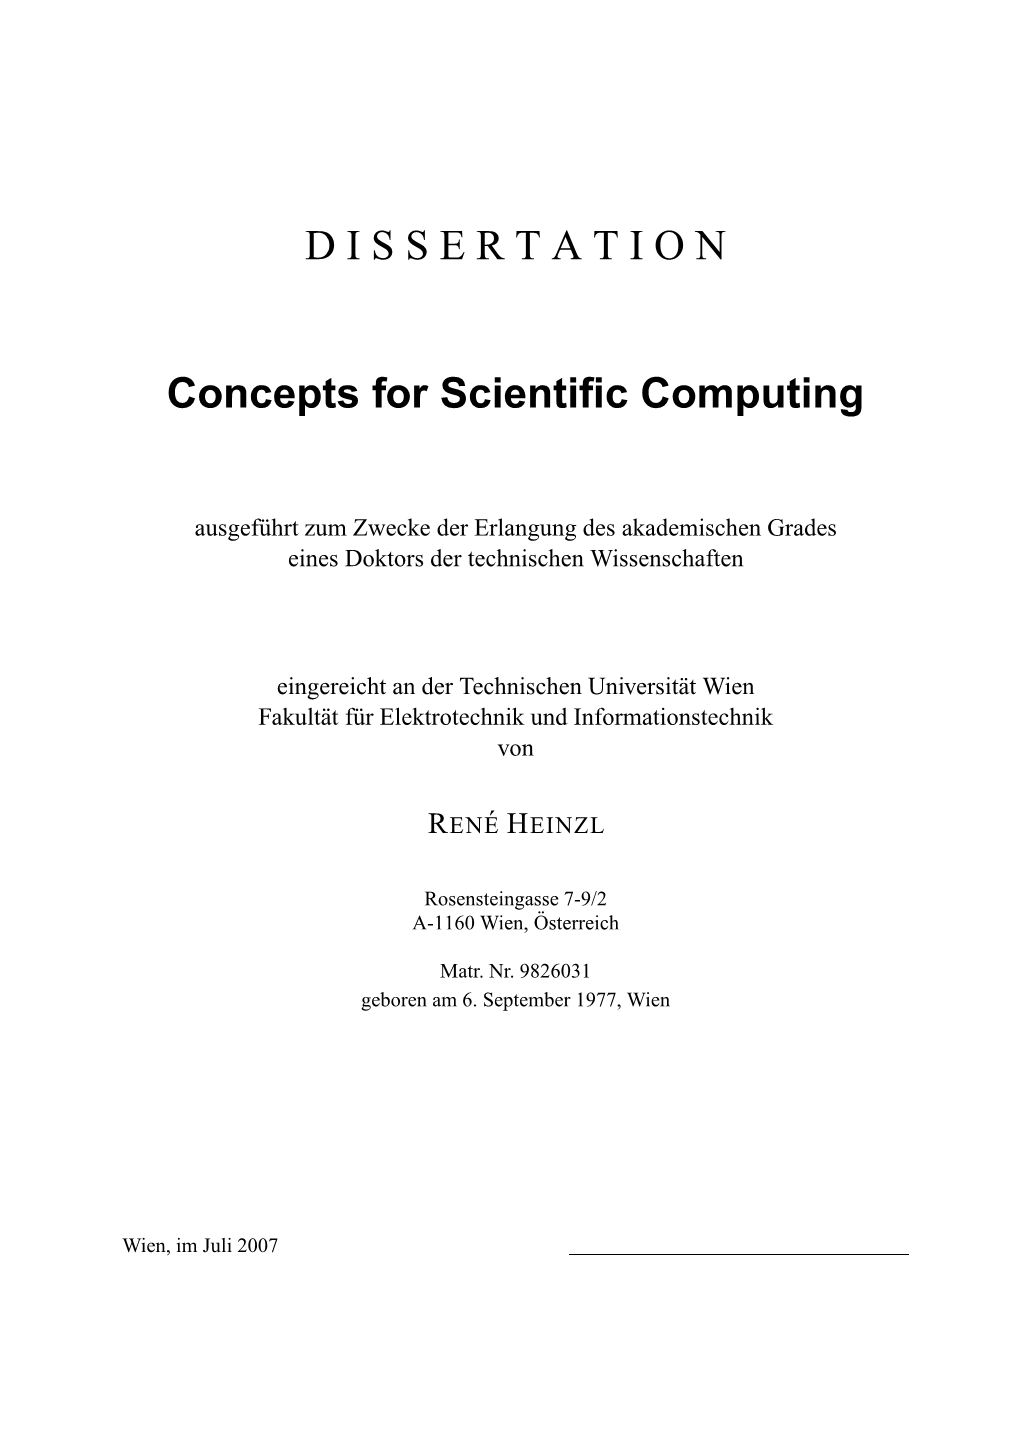 DISSERTATION Concepts for Scientific Computing